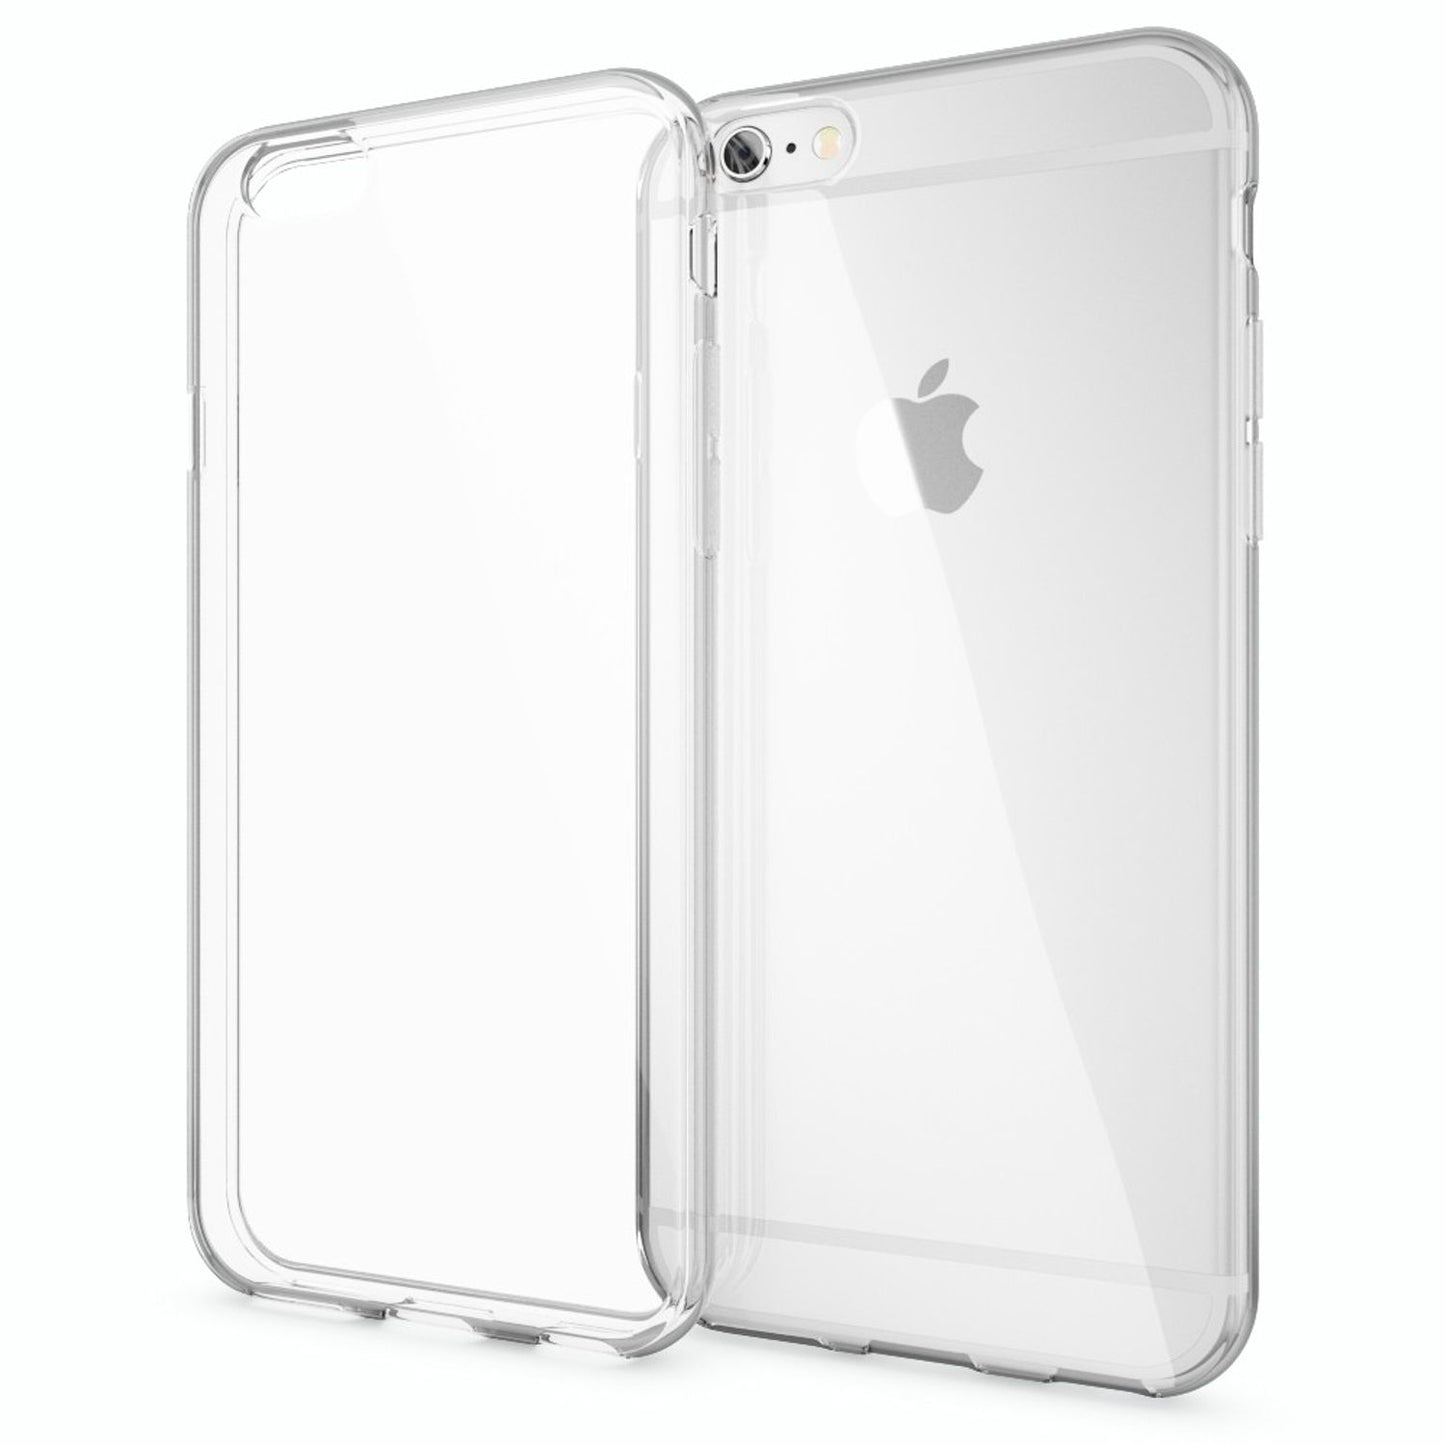 Apple iPhone 6 6S Hülle von NALIA, Case Cover Transparent Schutzhülle Handyhülle